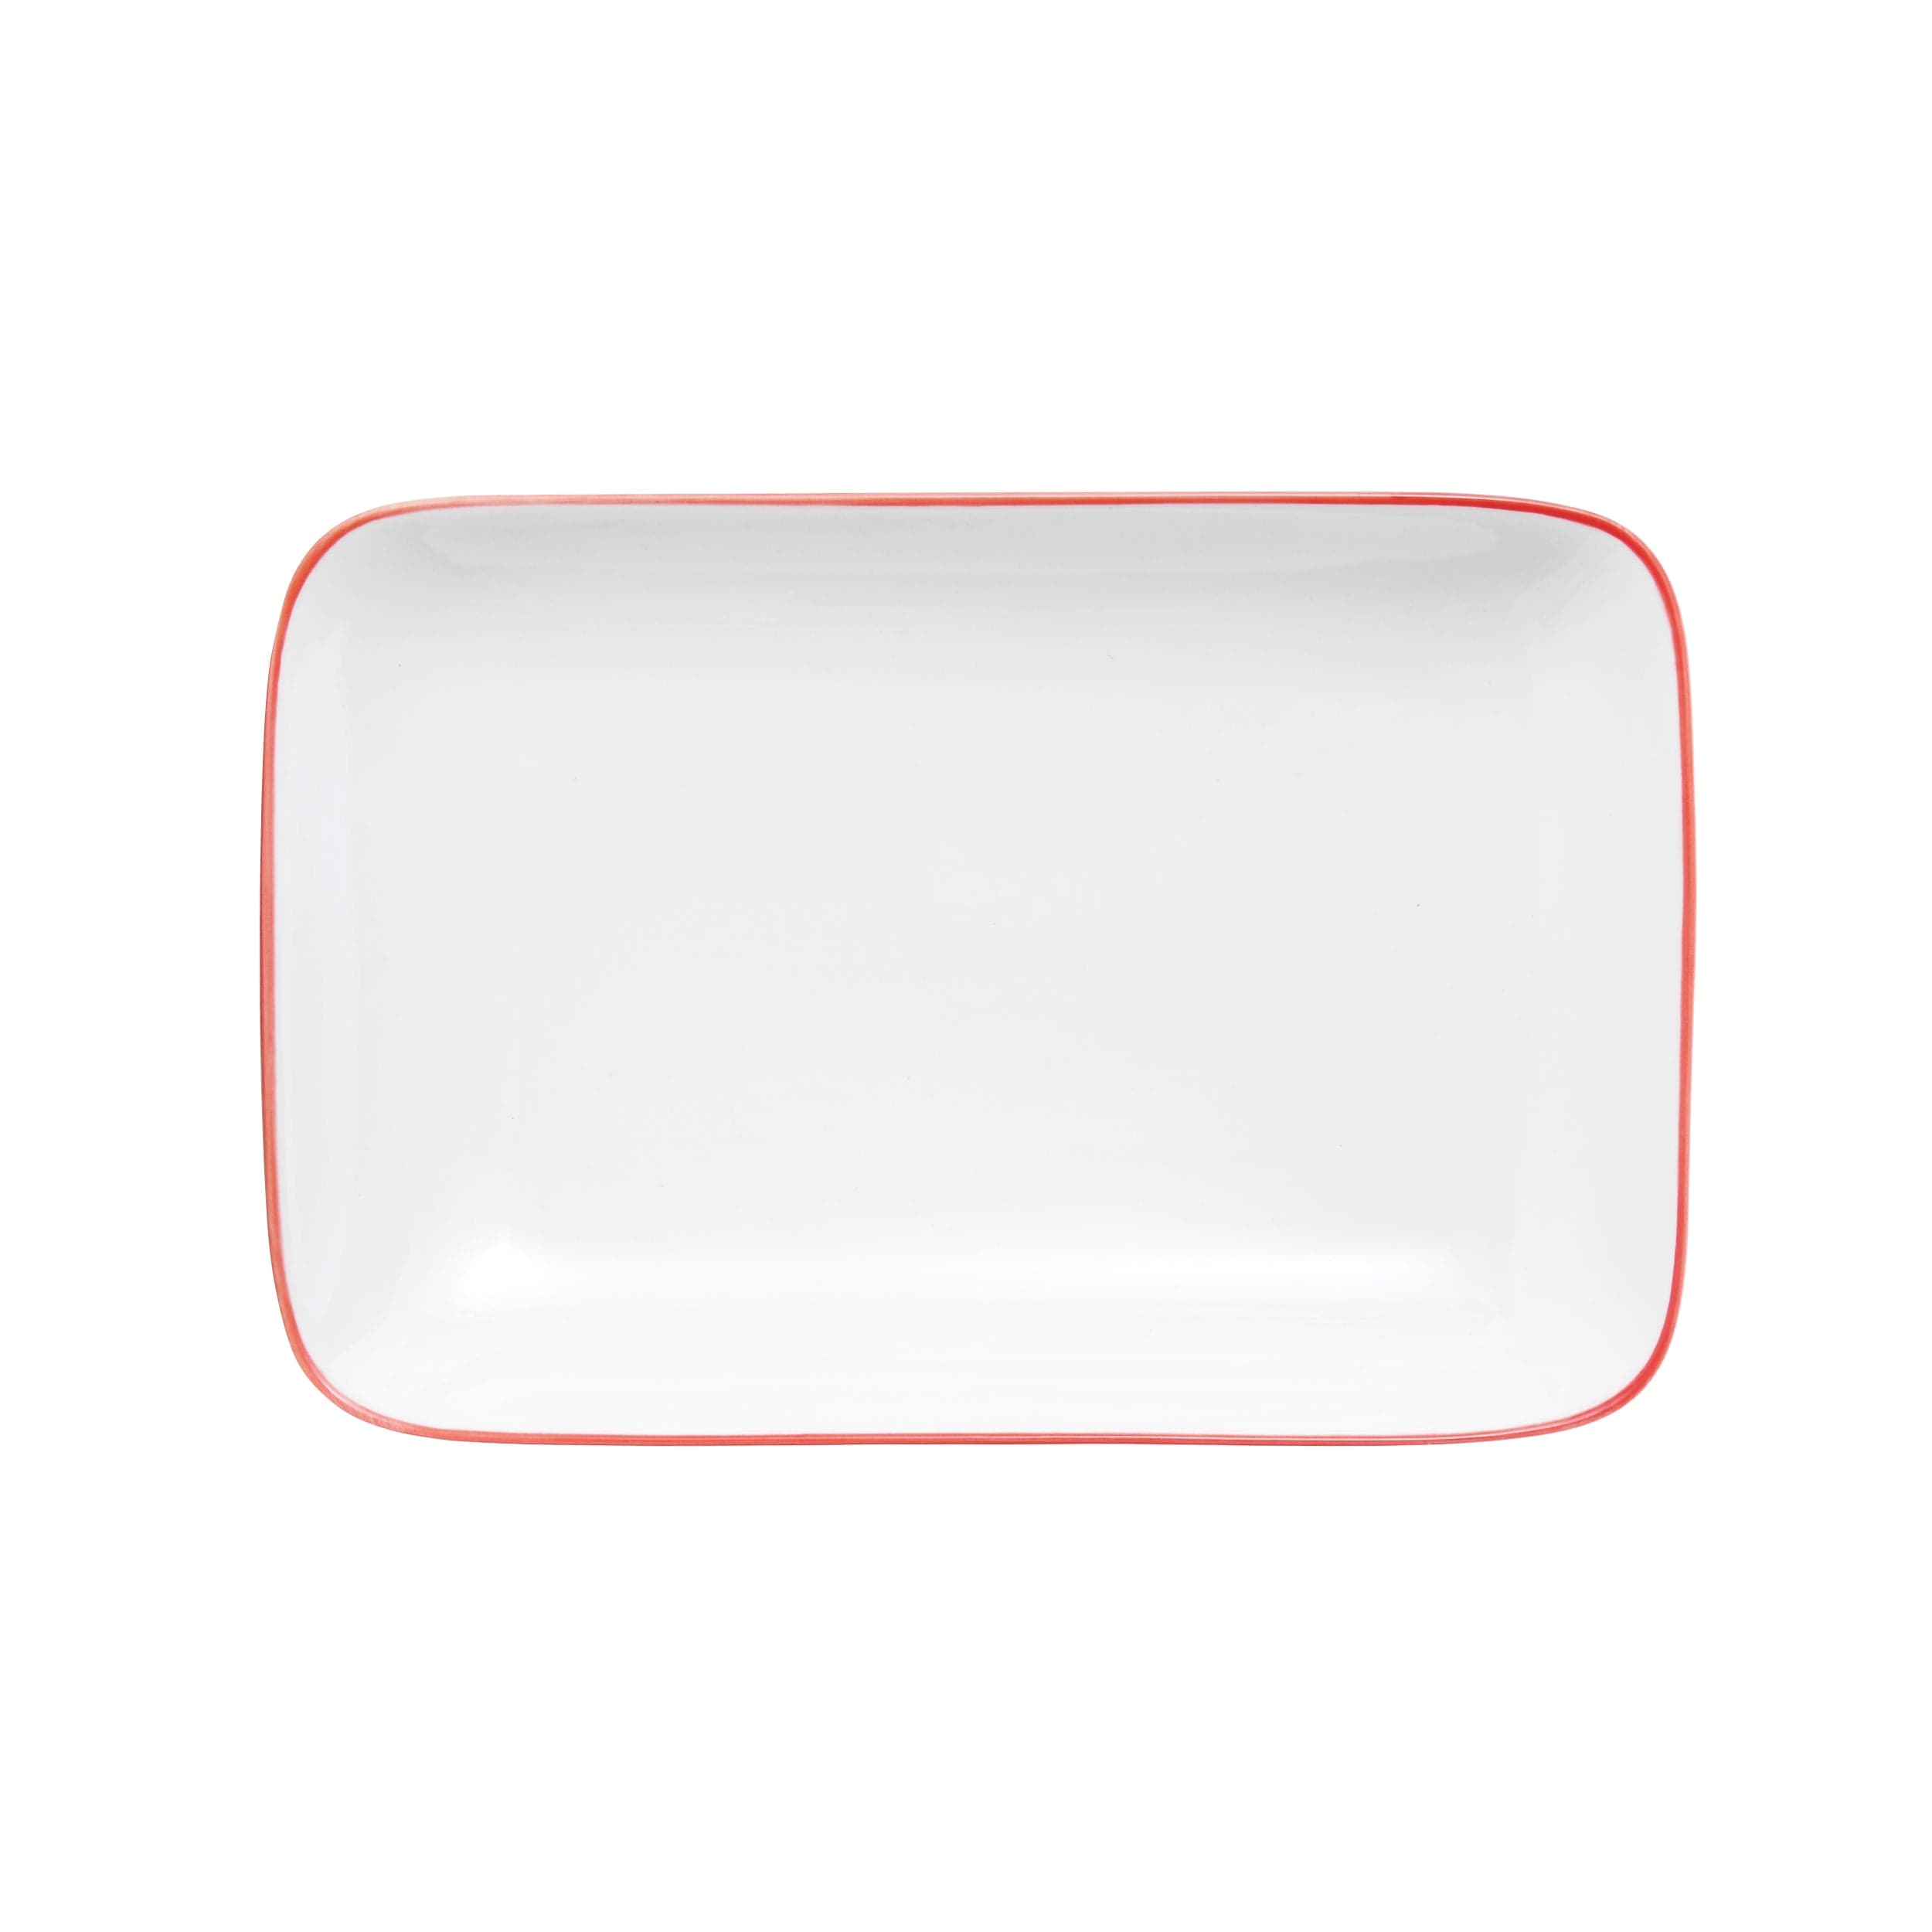 Bistro Pinstripe Porcelain Rectangular Platter 10x7" Red Pinstripe #color_red pinstripe